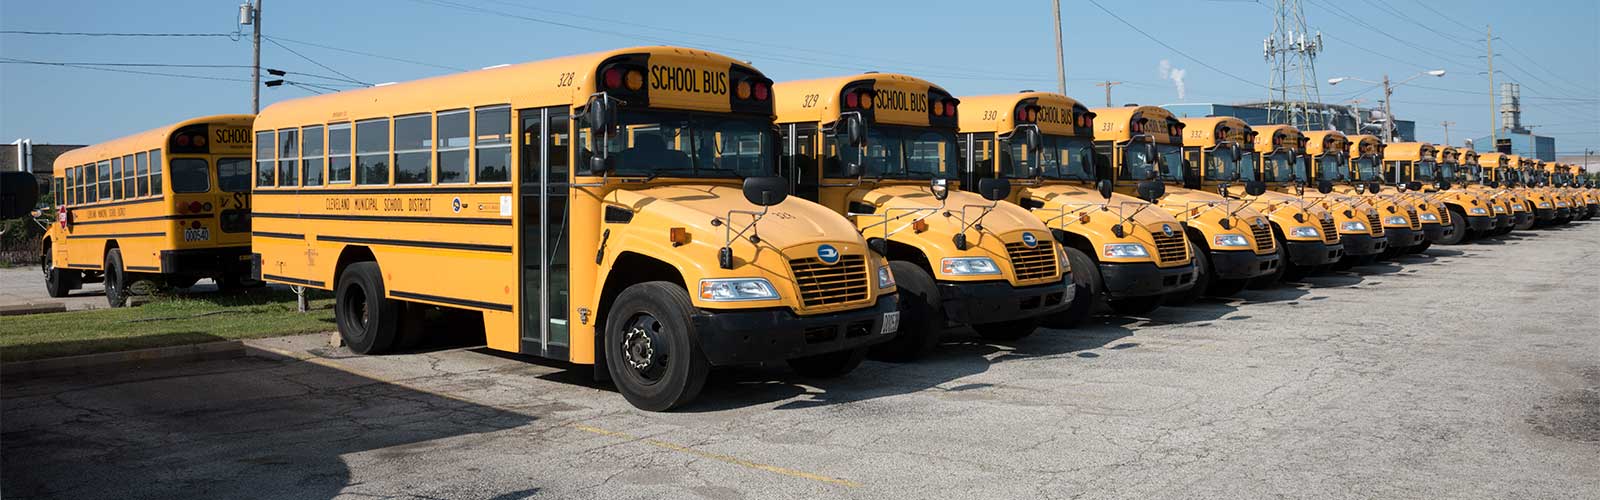 Cleveland Metropolitan School District propane buses